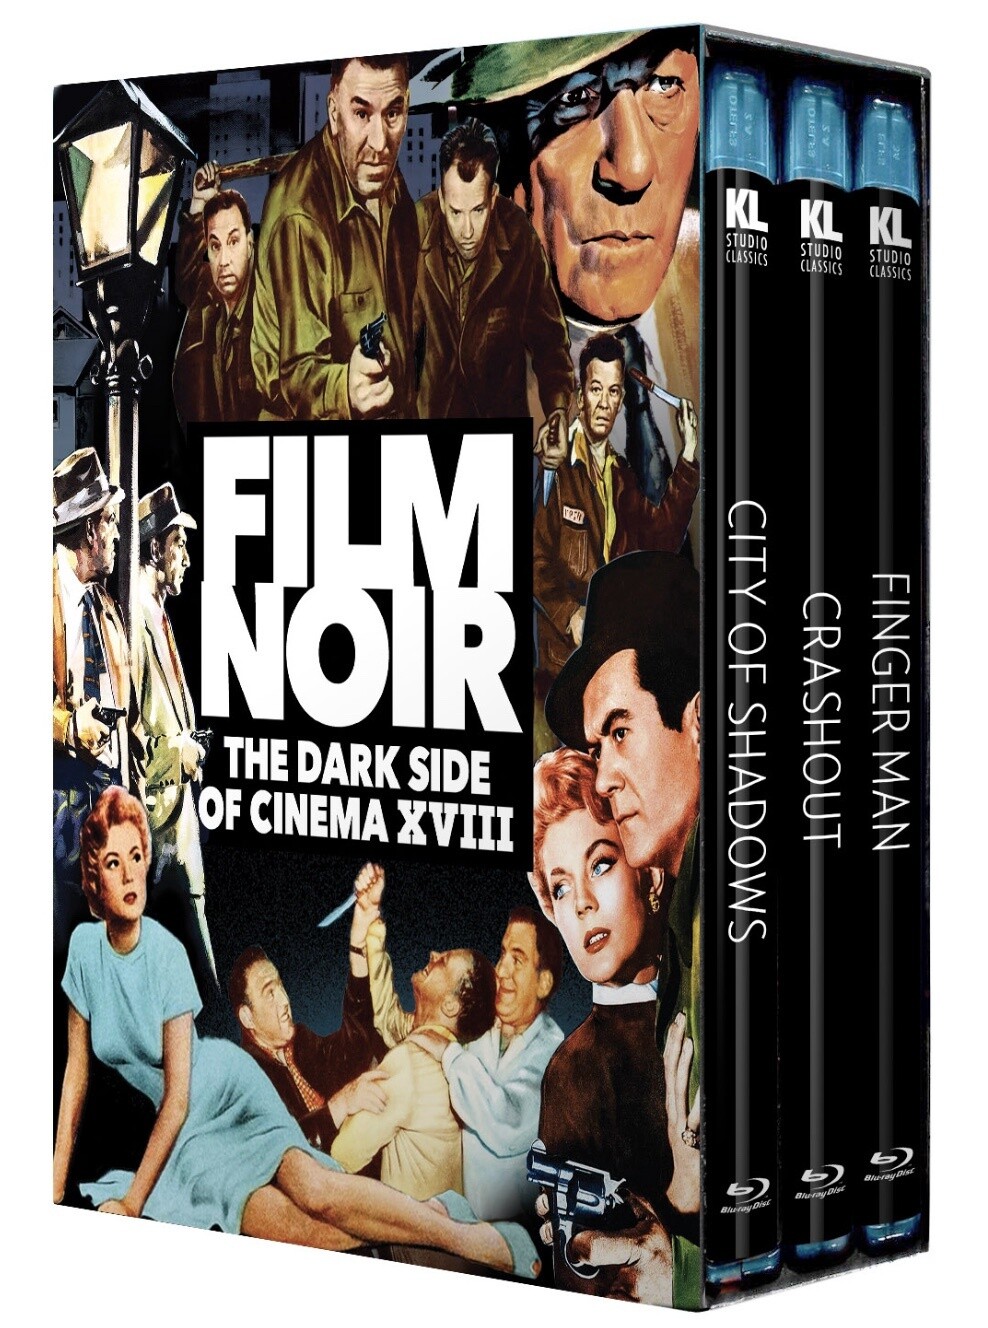 Film Noir: The Dark Side of Cinema XVIII (Blu-ray) ***Preorder*** 3/26